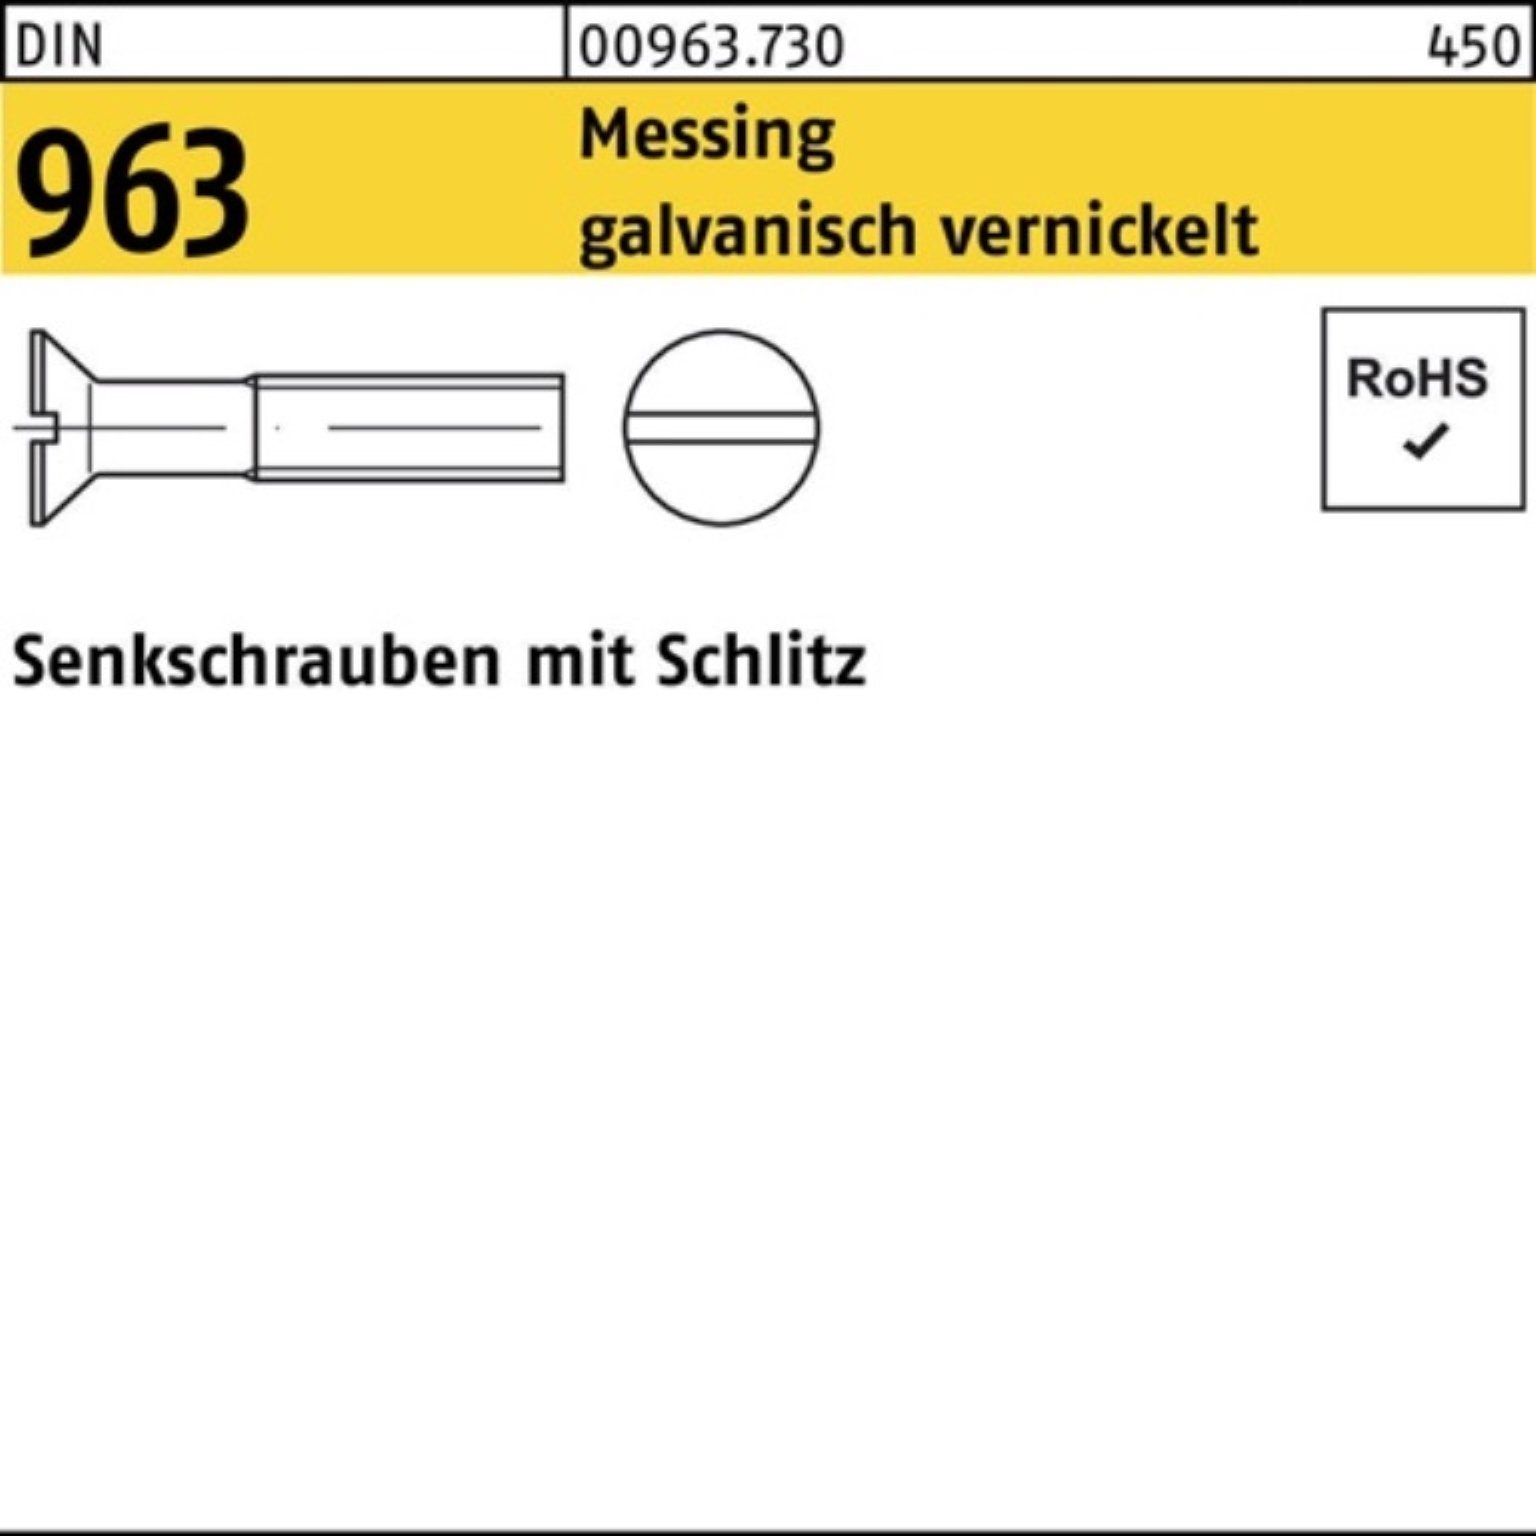 Reyher Senkschraube 200er Pack DIN Schlitz M4x 30 Messing vernickel galv. Senkschraube 963